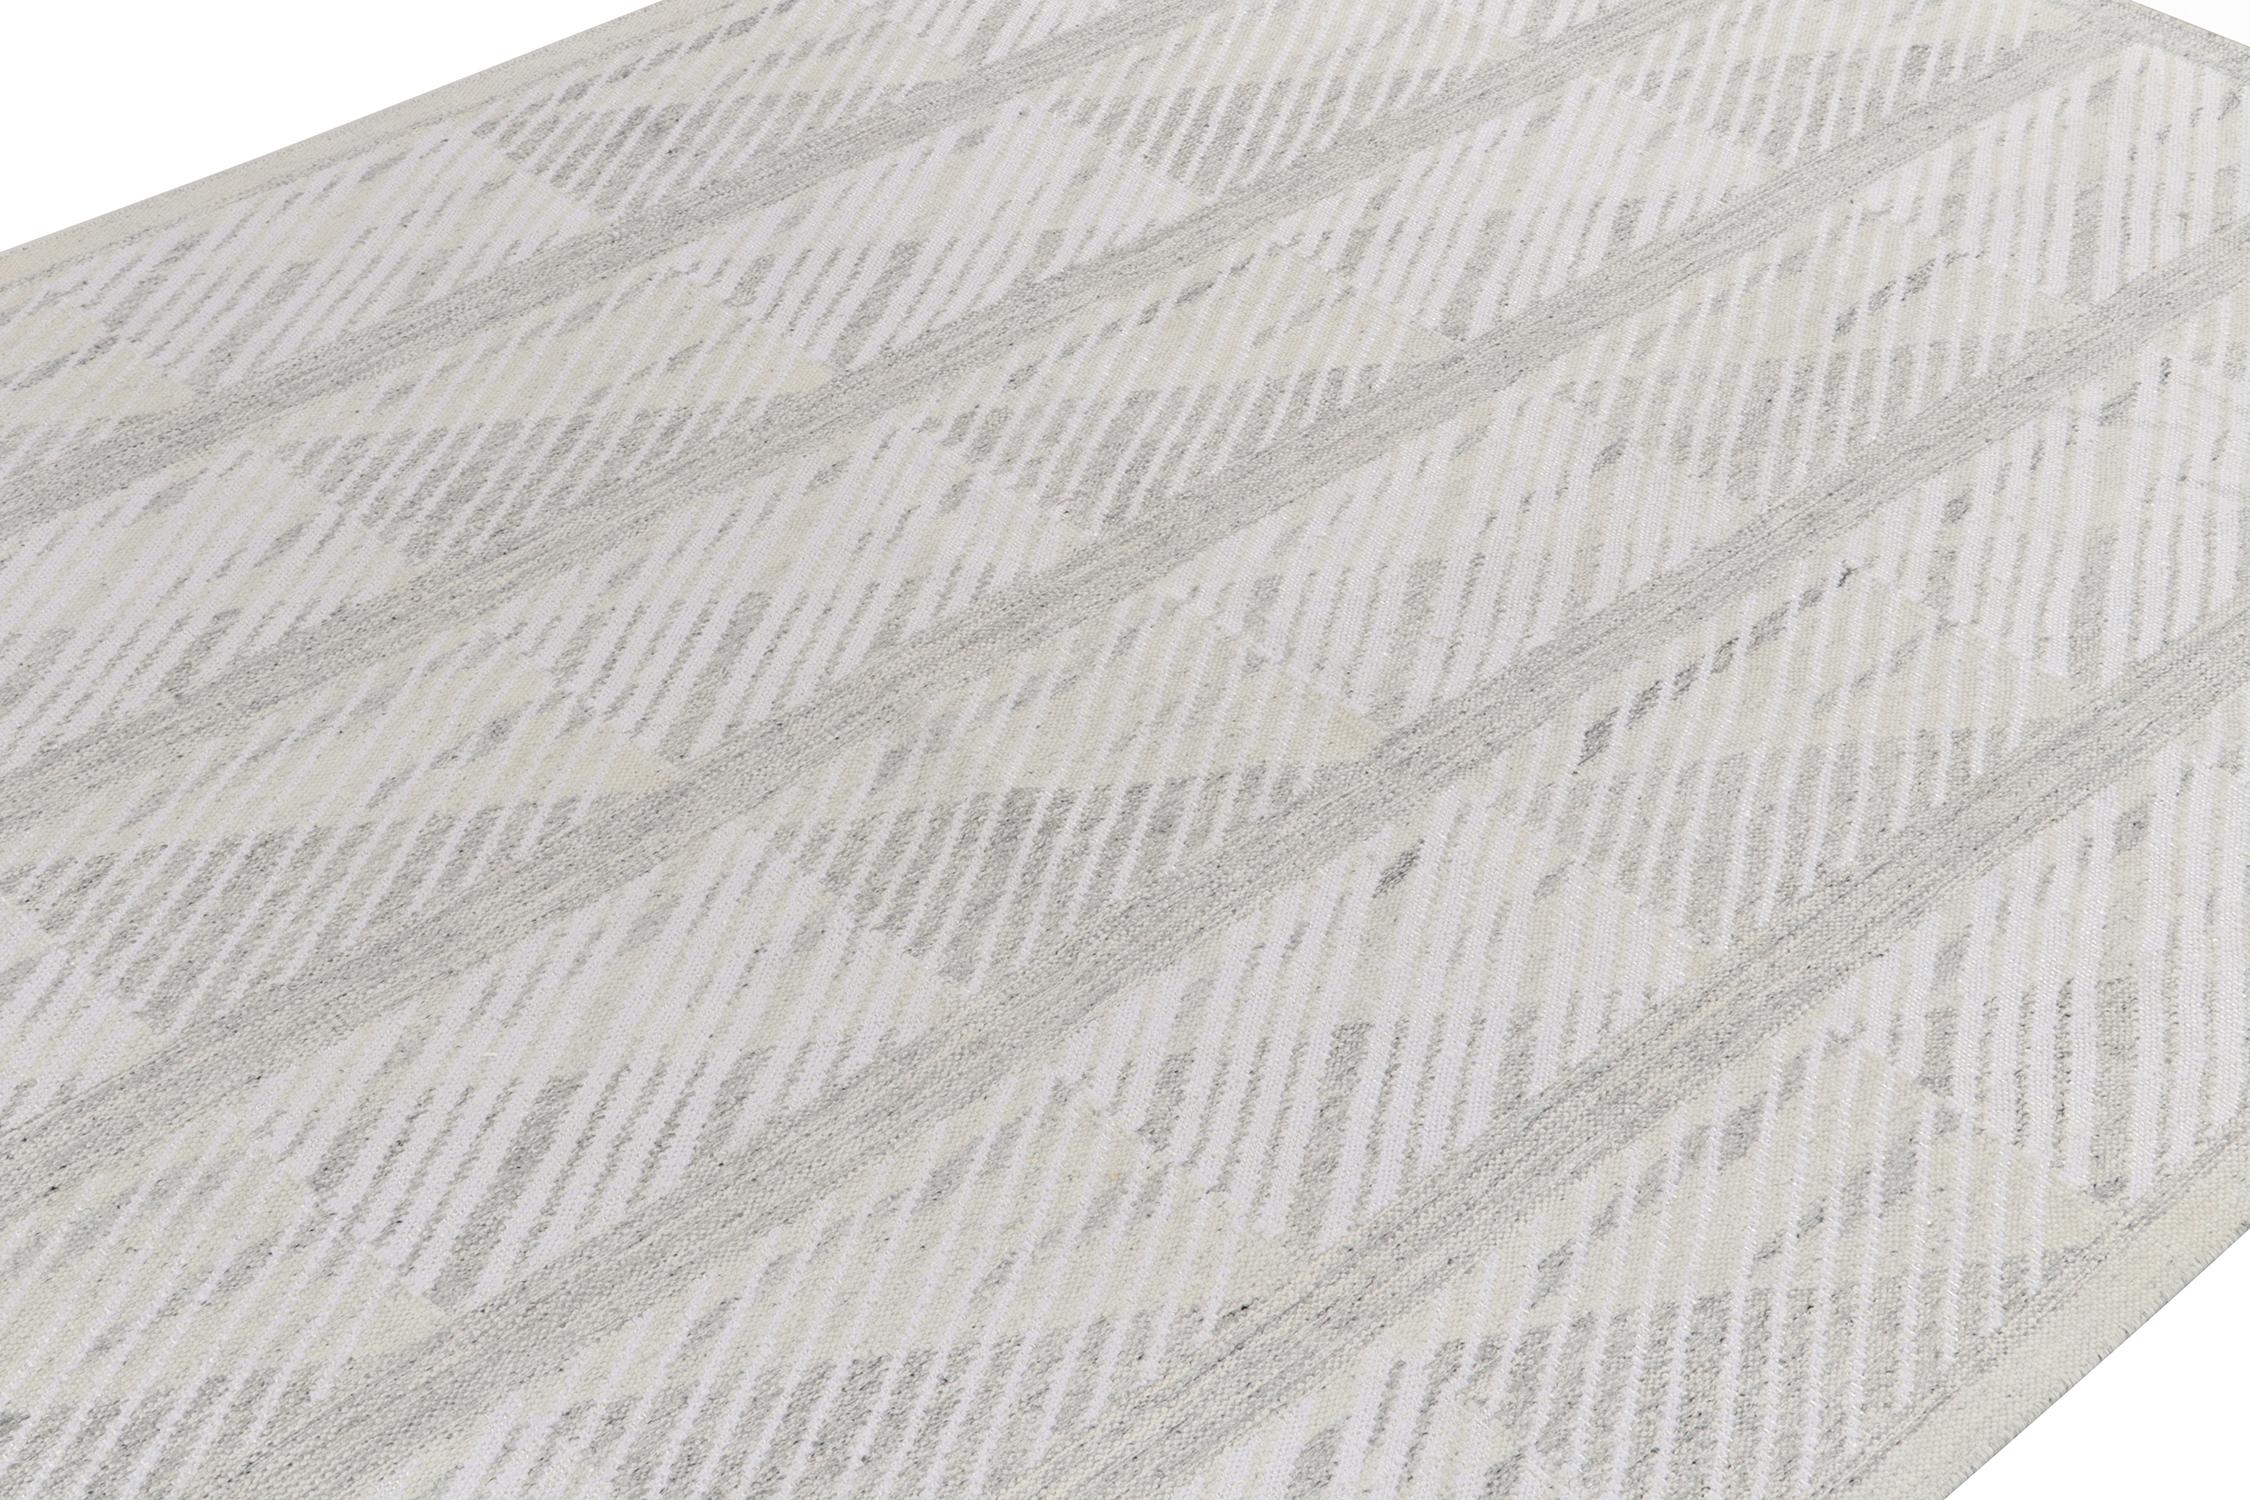 Indian Rug & Kilim's Scandinavian Style Kilim Rug in Gray, White Geometric Pattern For Sale